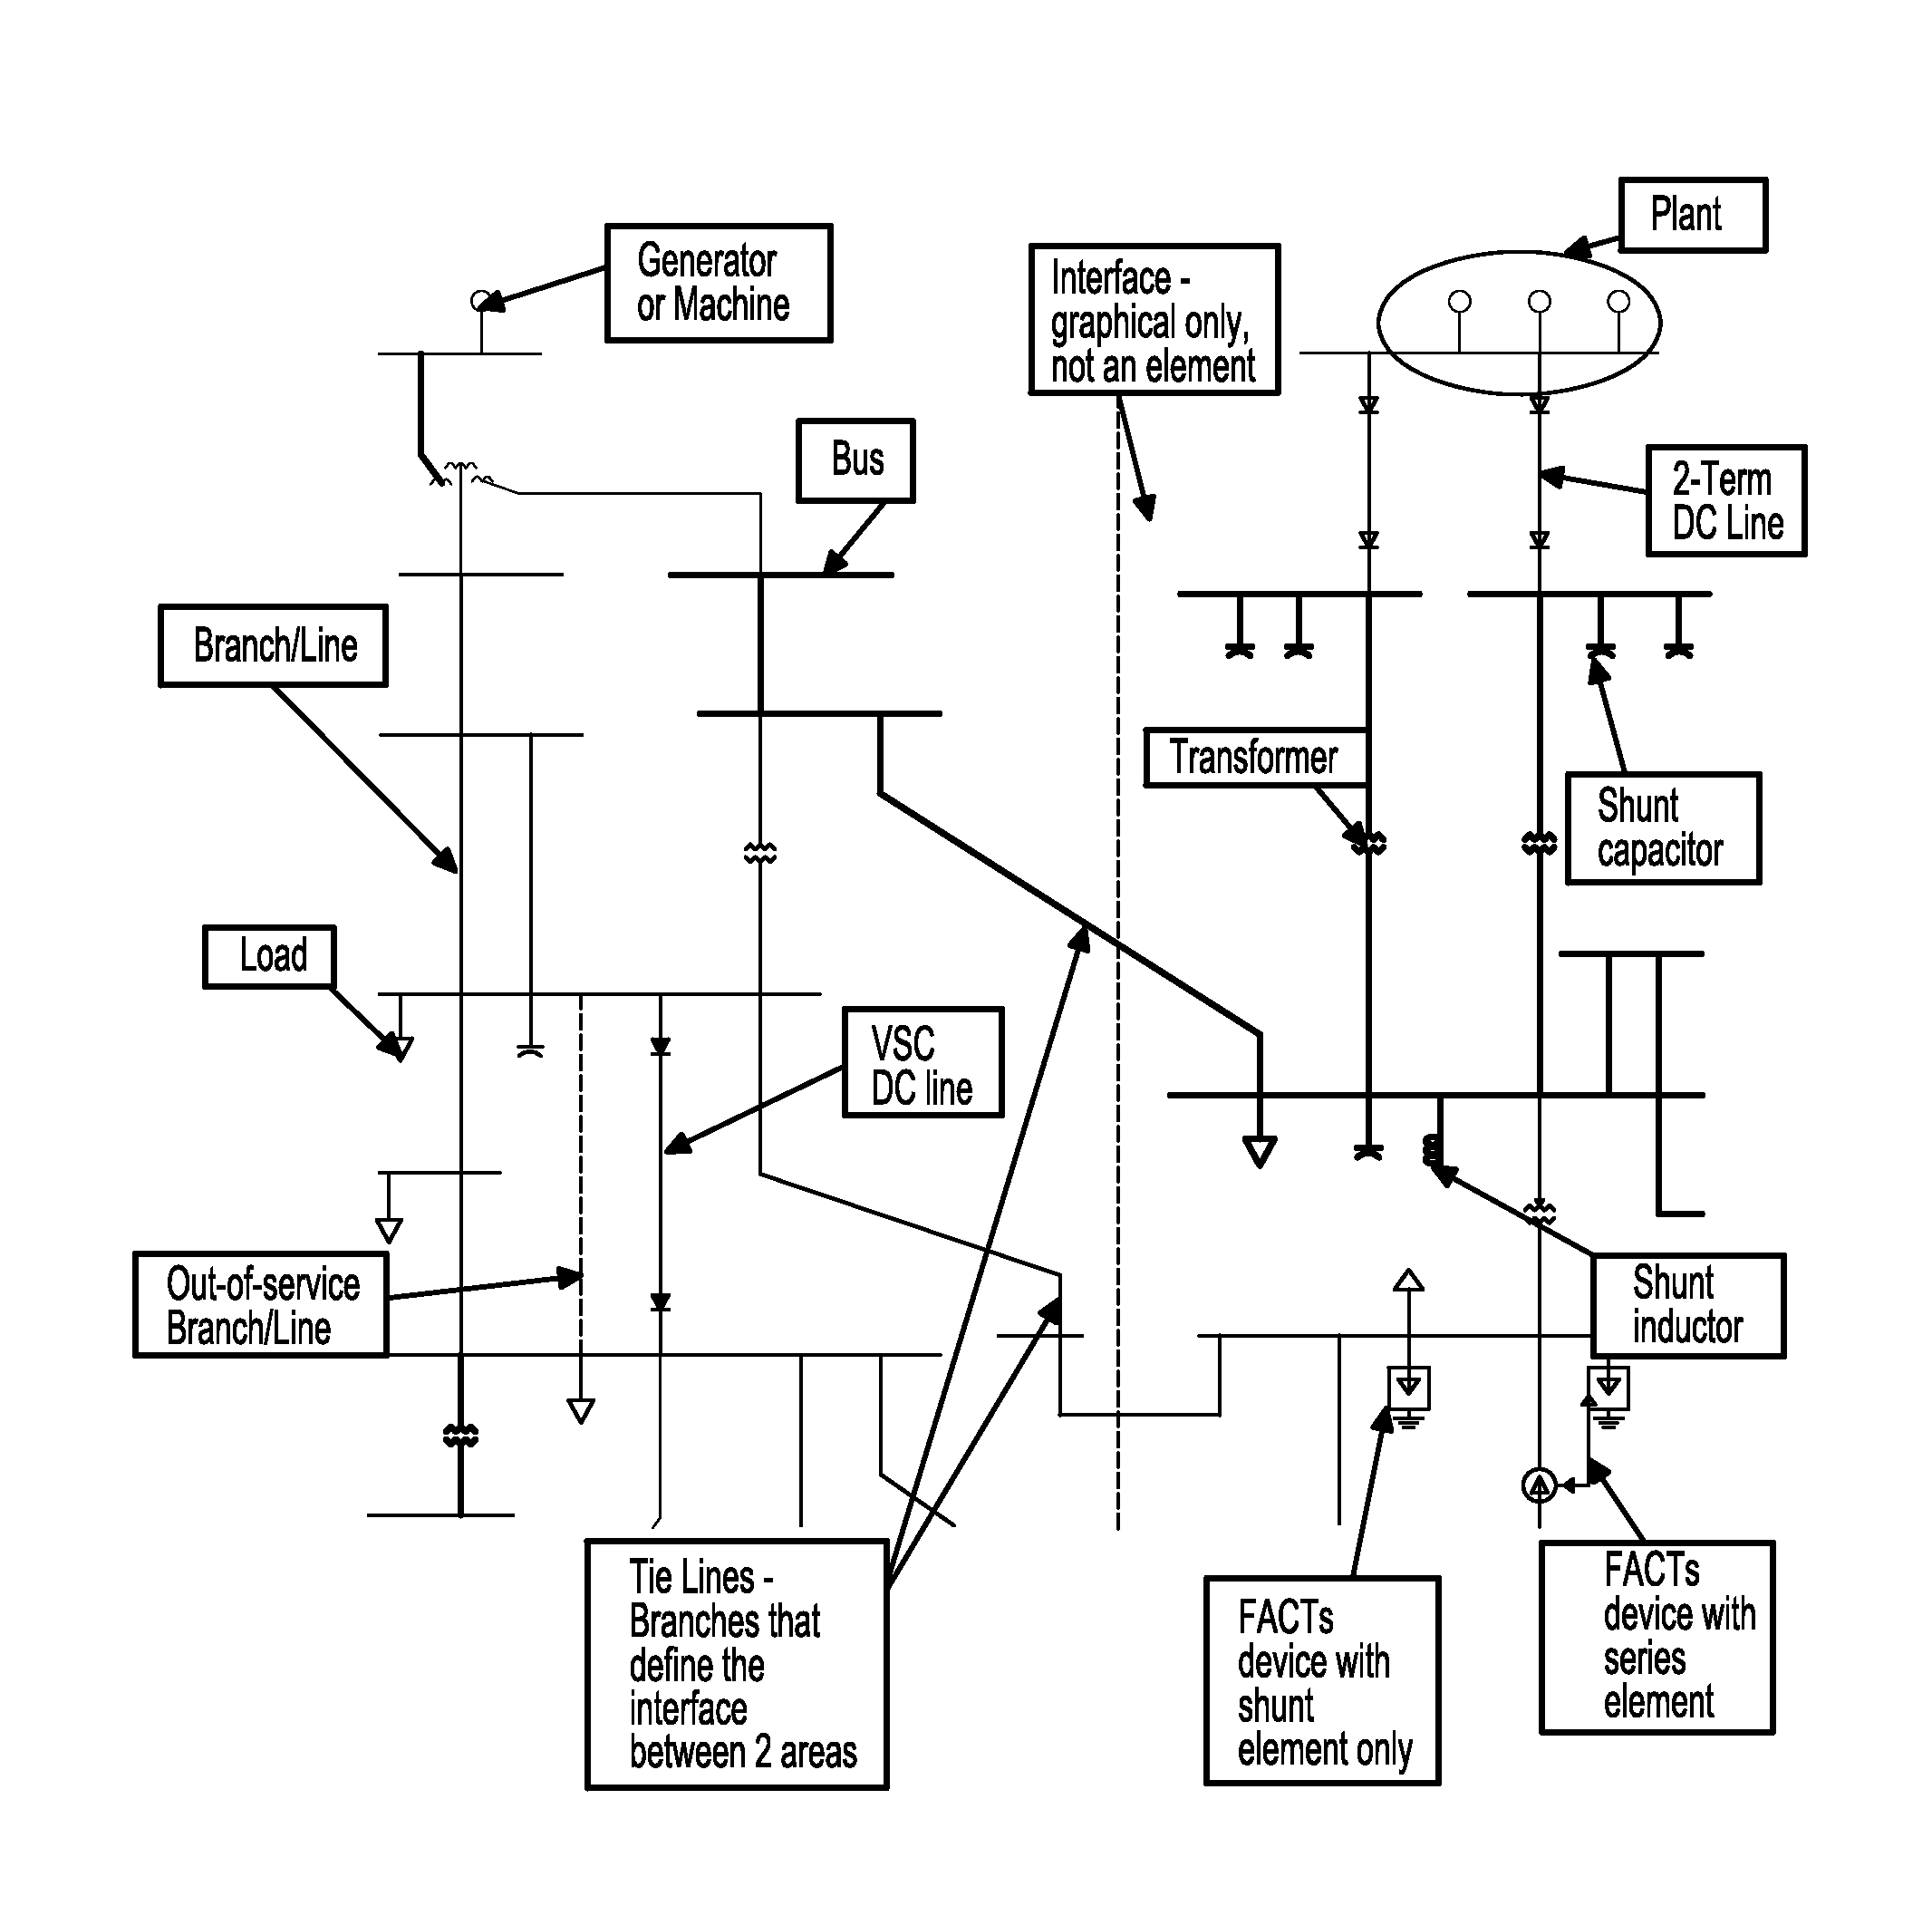 Interior point method for reformulated optimal power flow model